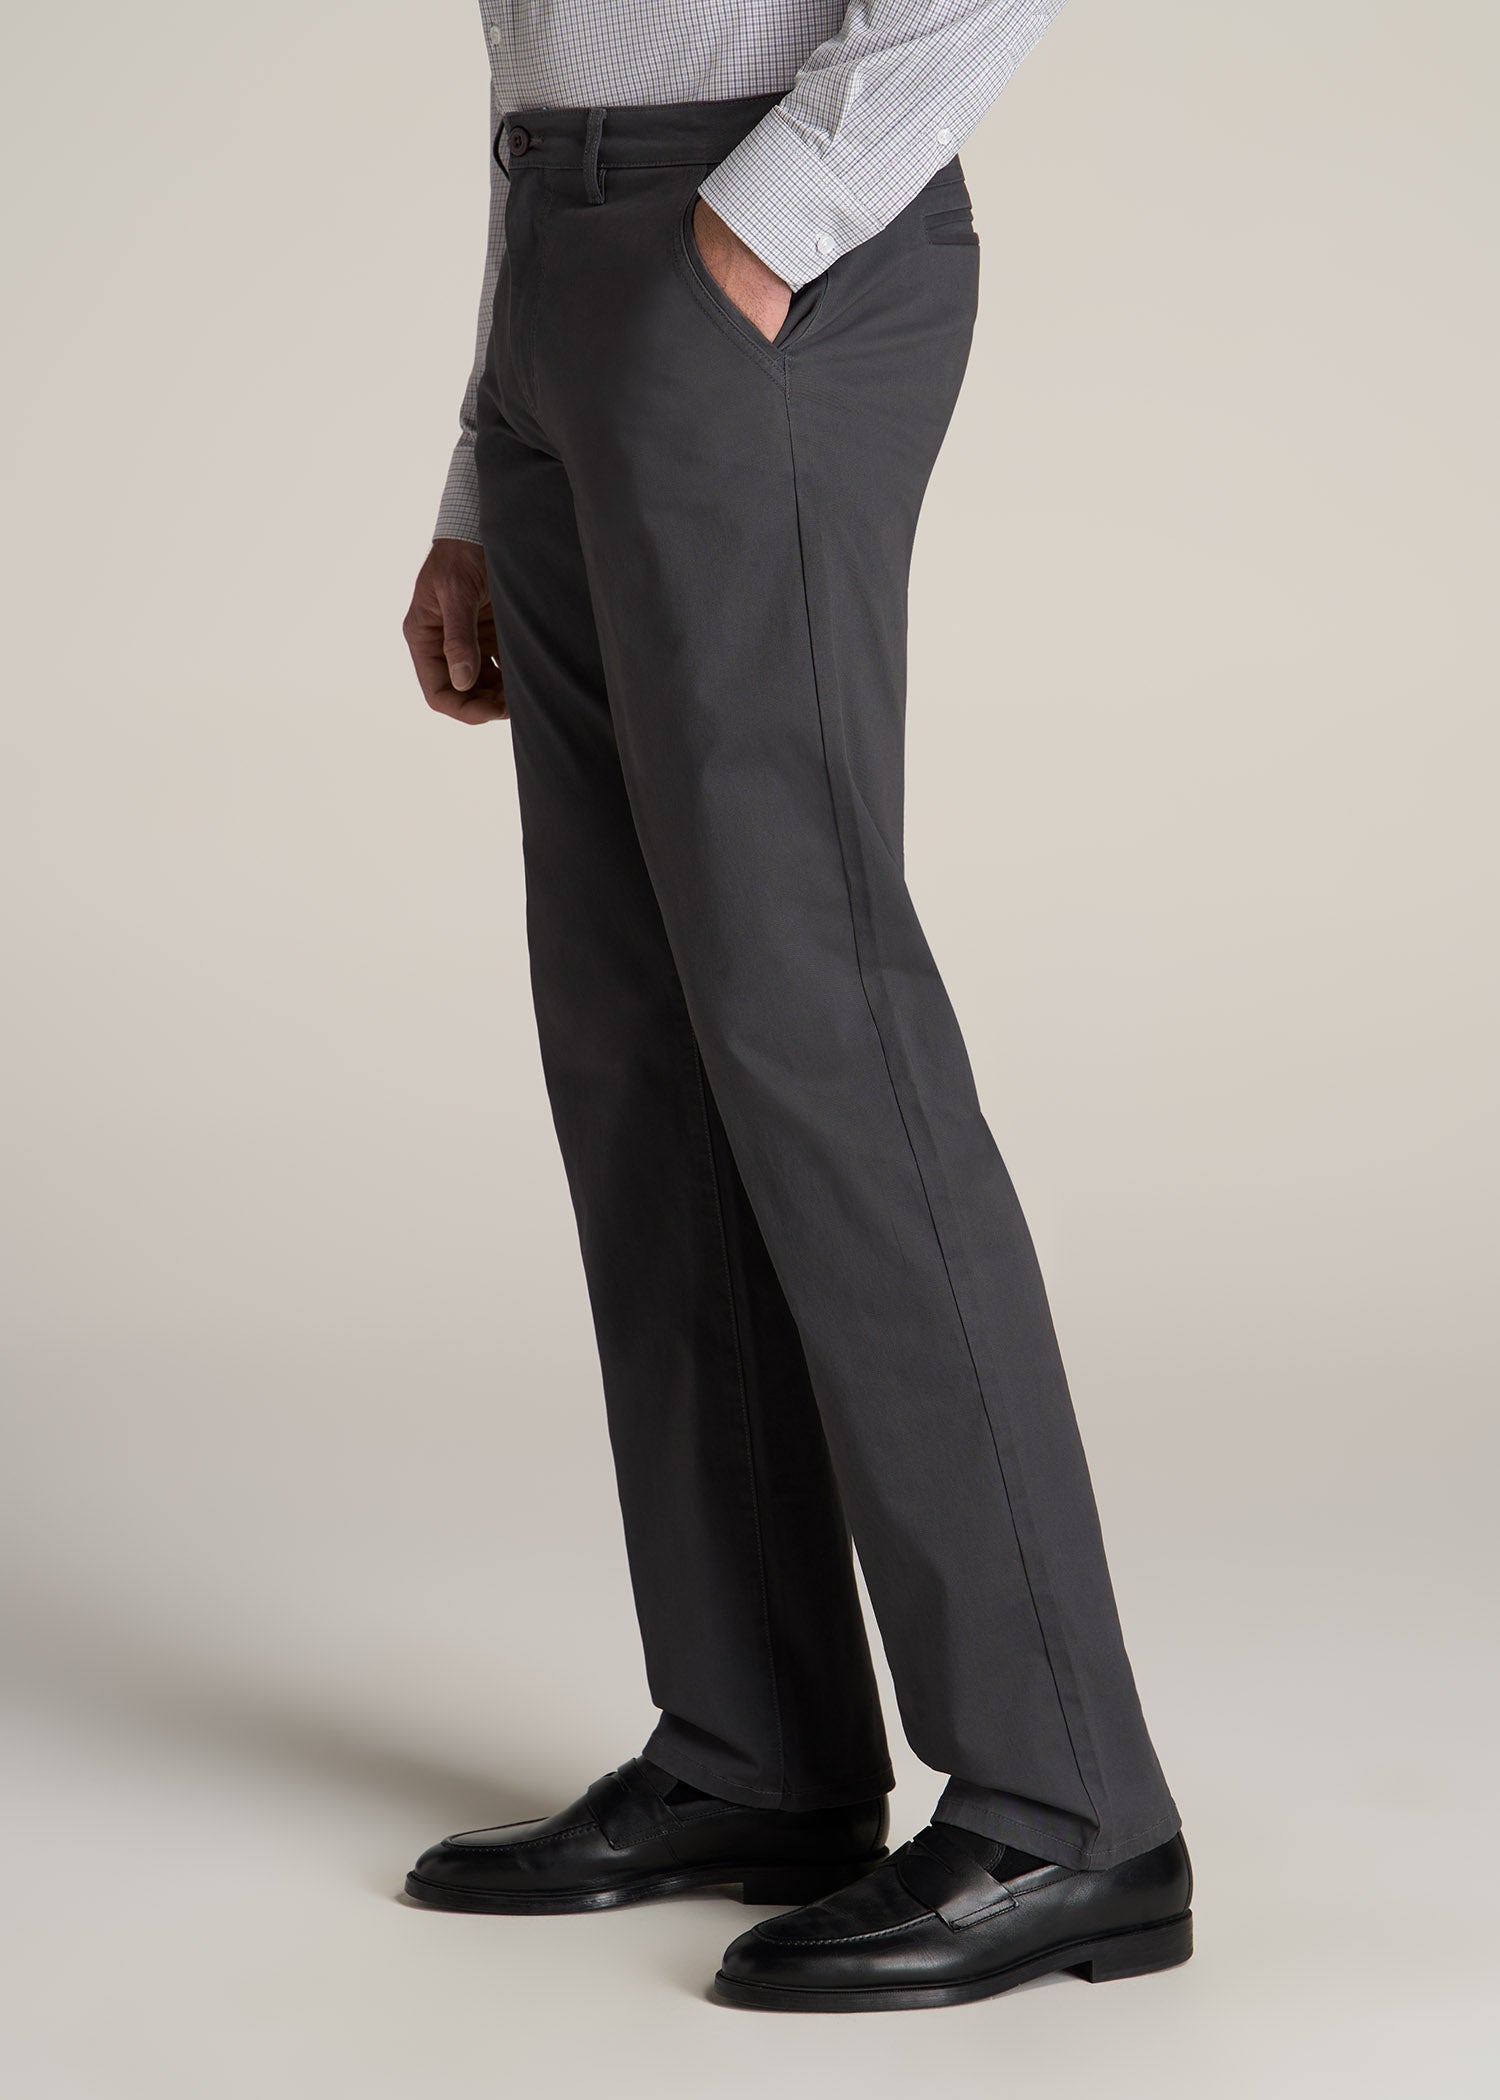 Formal Plated Trousers,Formal Plated Trousers Manufacturer in Delhi, India